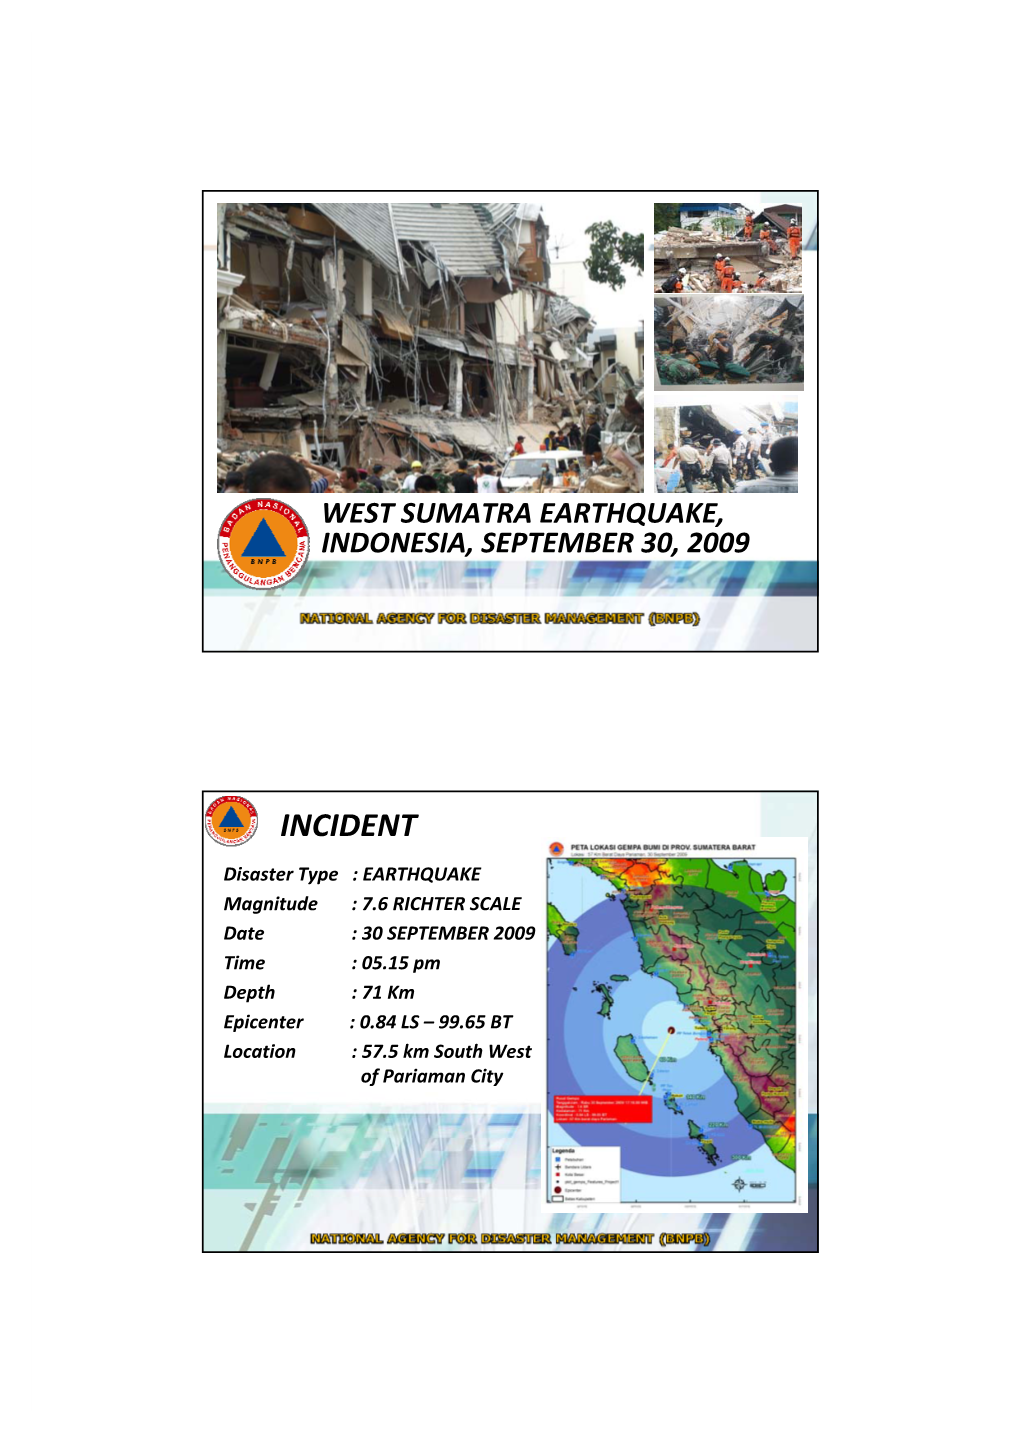 Sumatra Earthquake in October 2009 by Mr. Sugeng Triutomo, Deputy